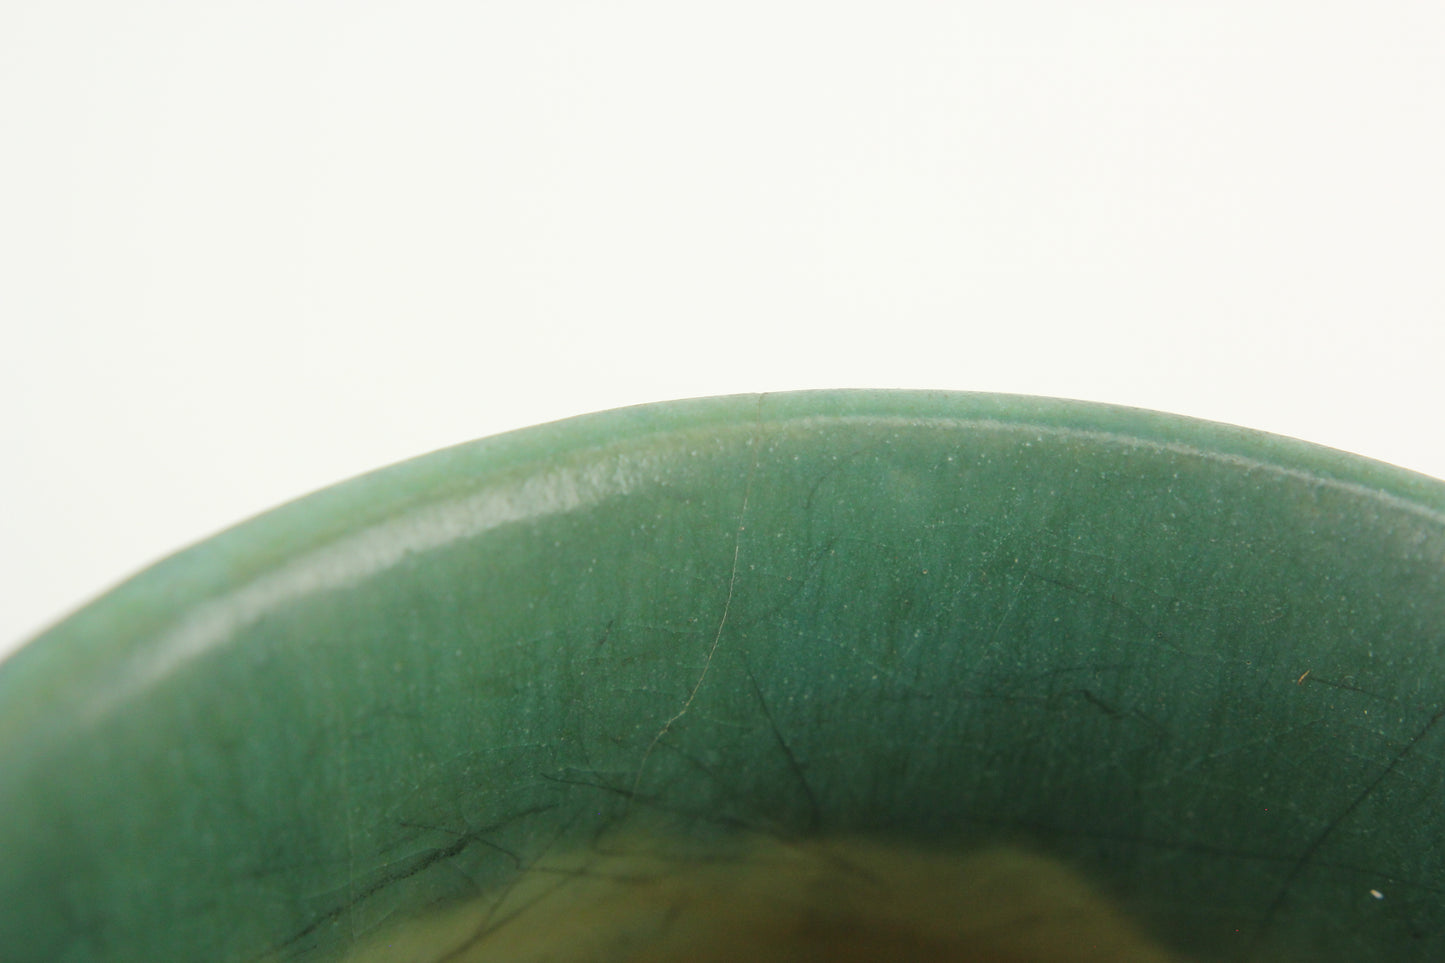 Roseville 91-8" Art Pottery Green Magnolia Vase, U.S.A.